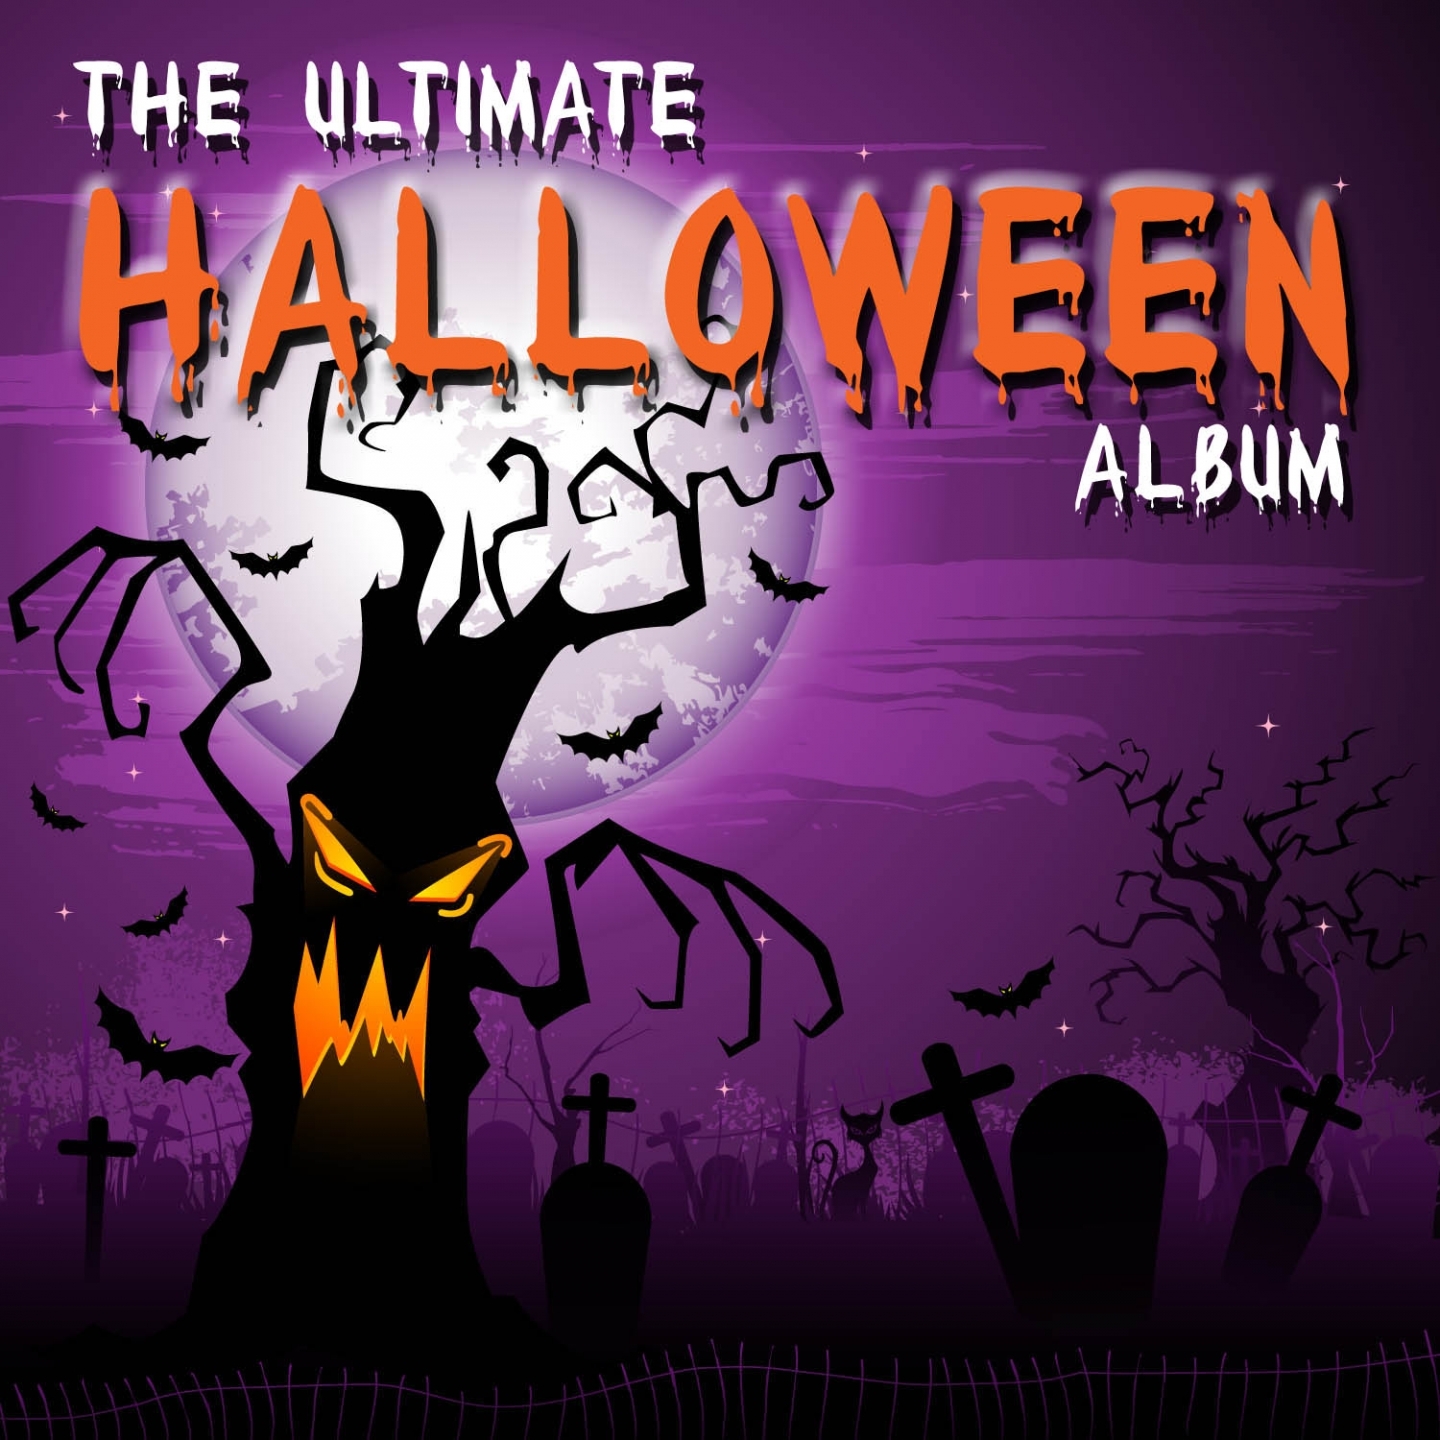 The Ultimate Halloween Album